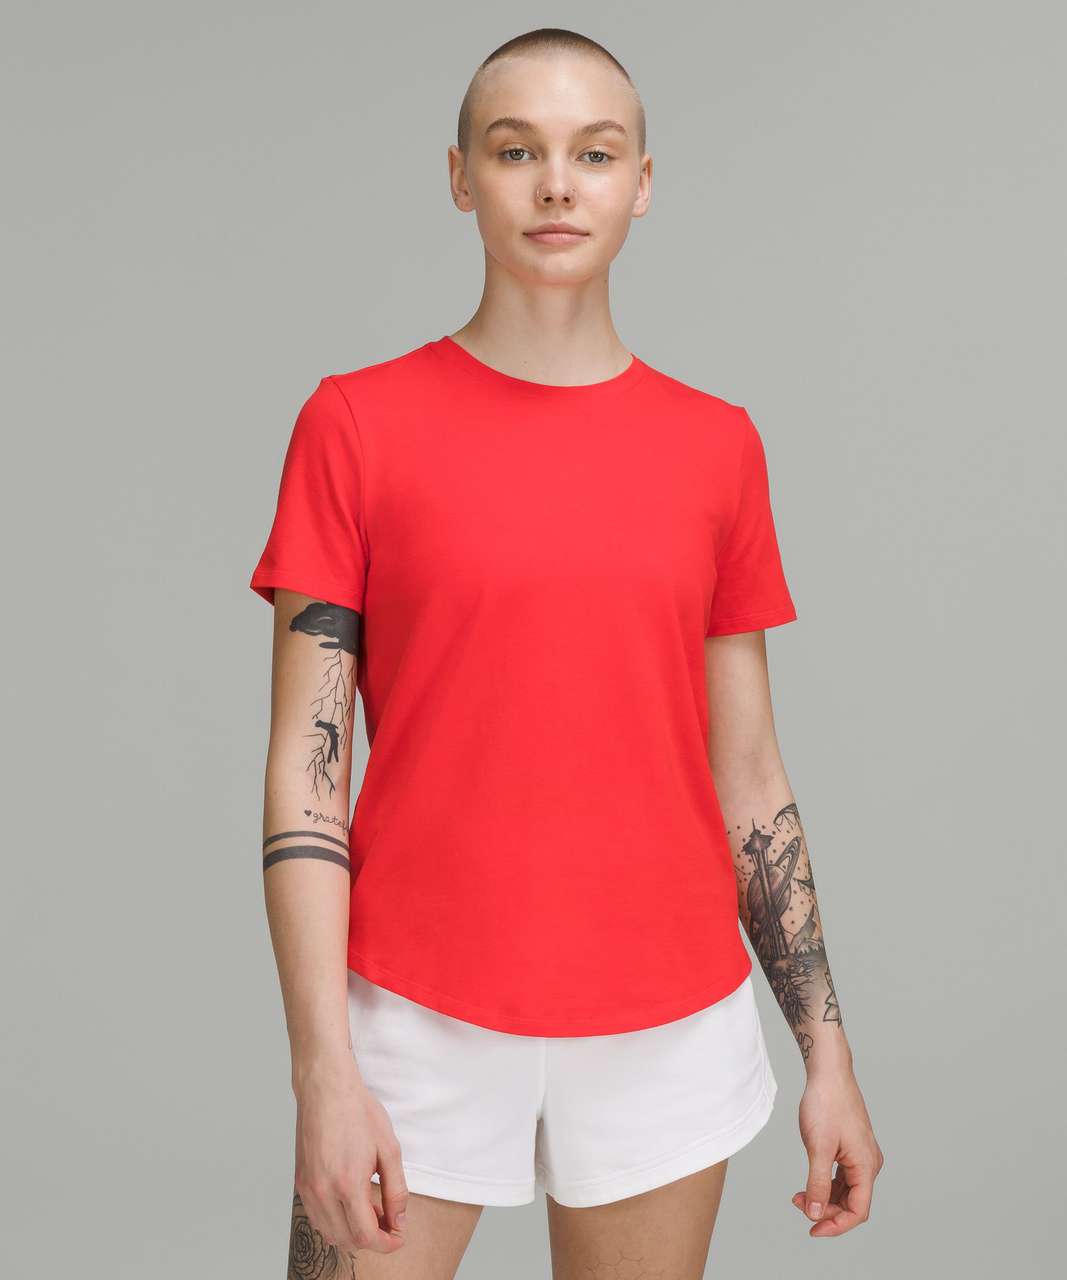 Lululemon Love Crew Short Sleeve T-Shirt - Love Red